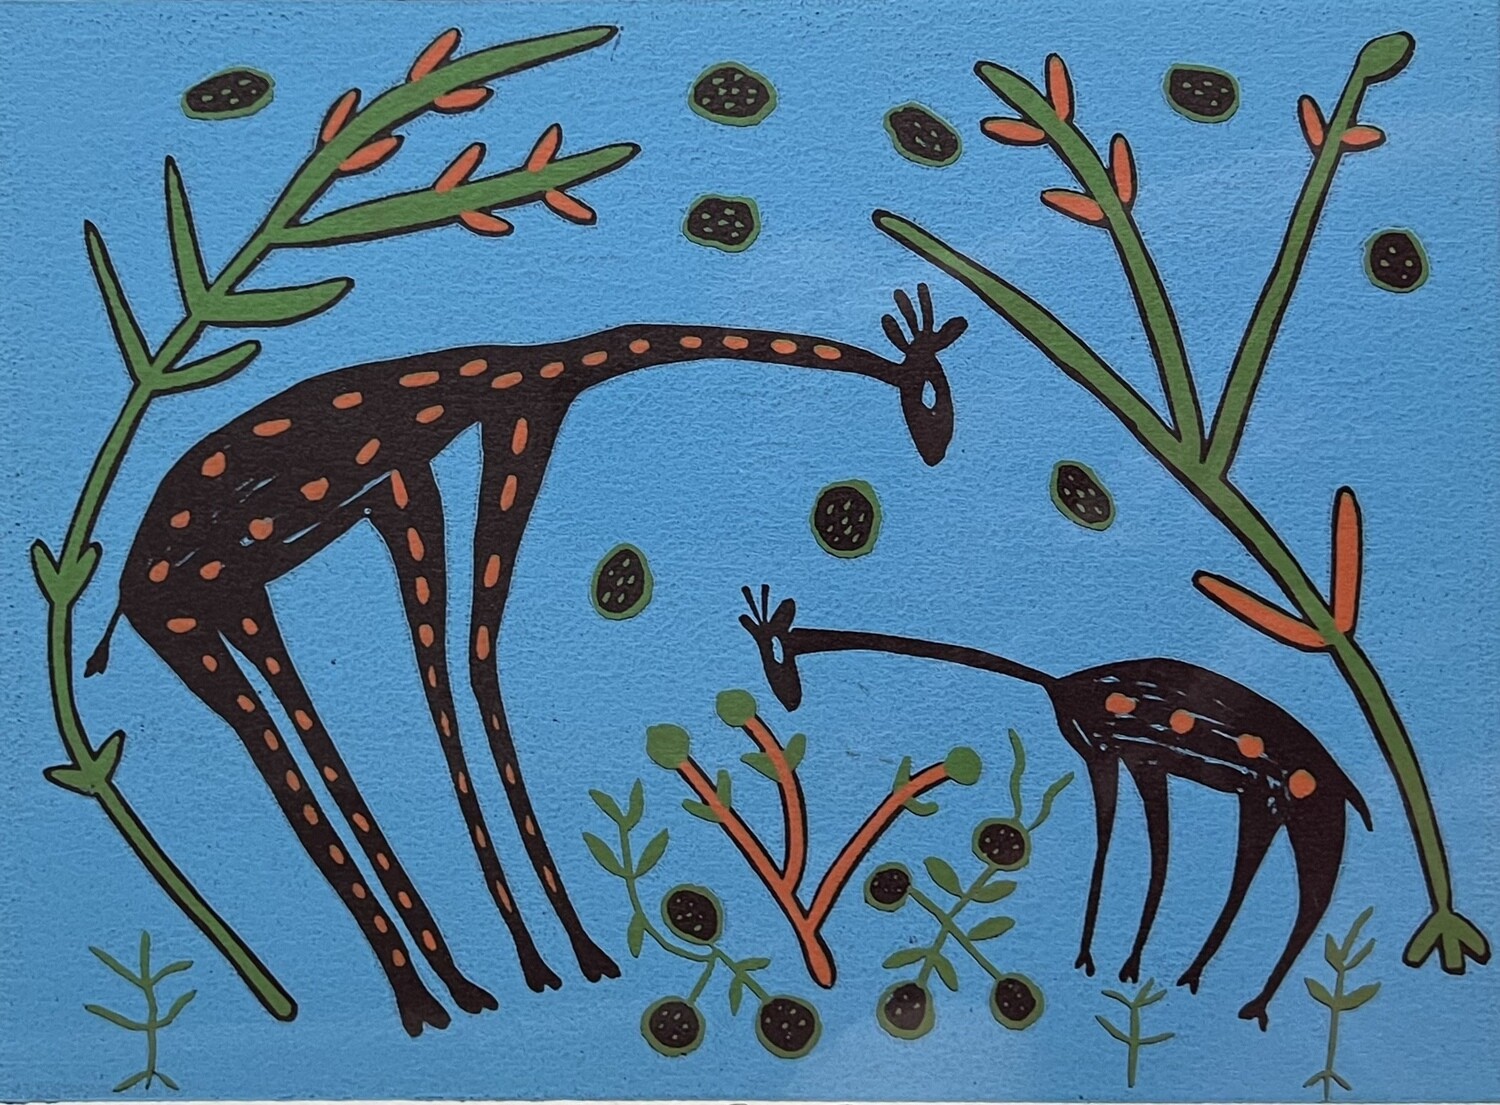 Kuru Art - Giraffe and Camelthorn Tree